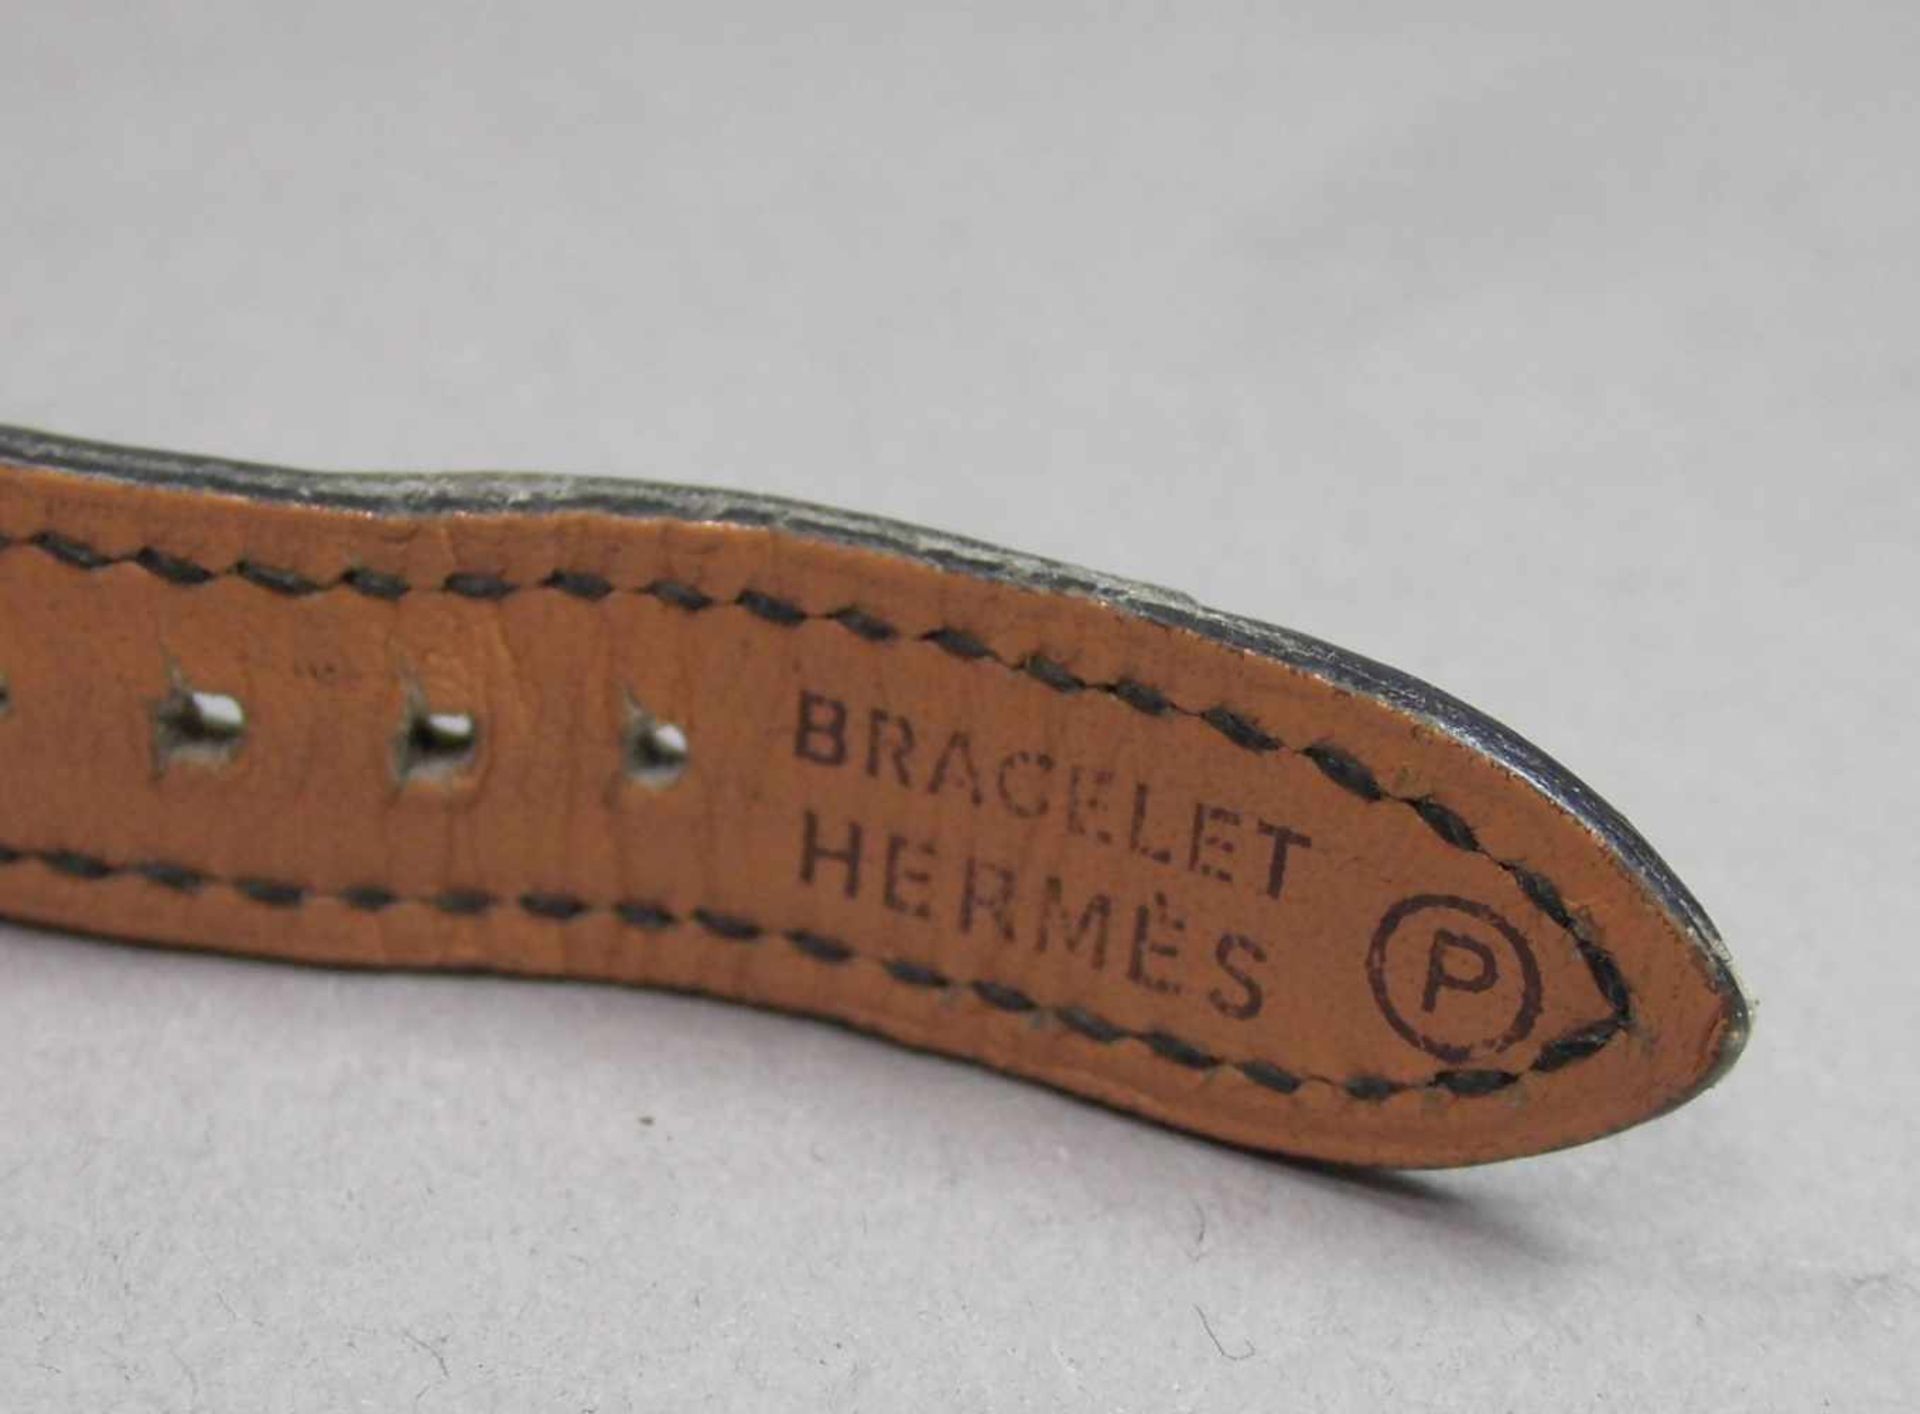 HERMES VINTAGE DAMEN-ARMBANDUHR "KELLY WATCH" / wristwatch, mit originalem Hermes Lederarmband. - Bild 3 aus 6